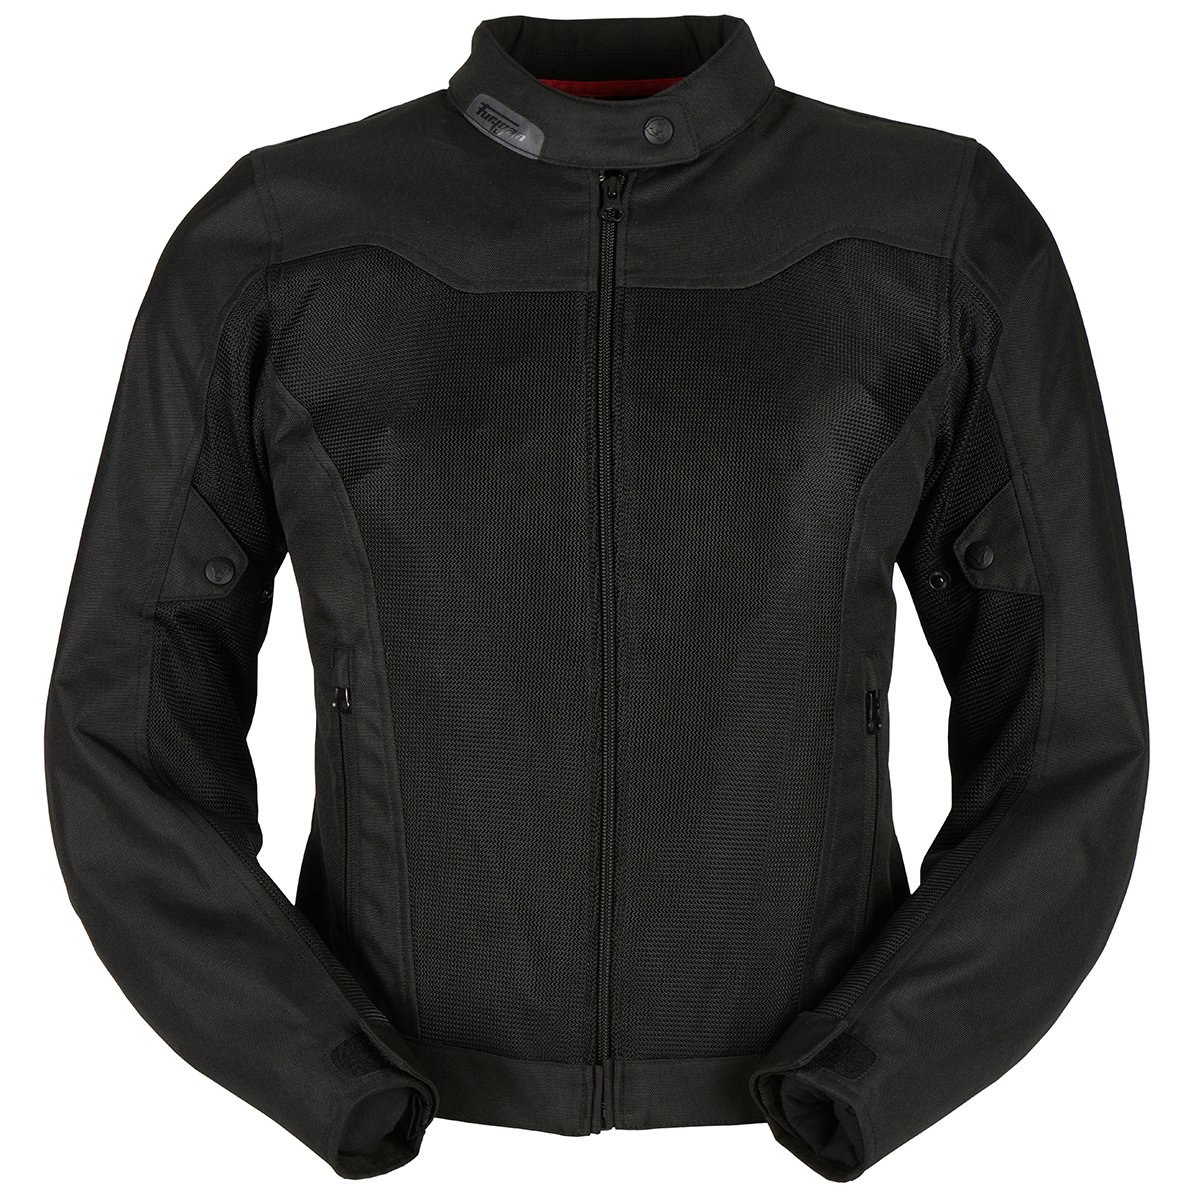 Image of Furygan Mistral Evo 3 Jacket Lady Black Size S ID 3435980342340